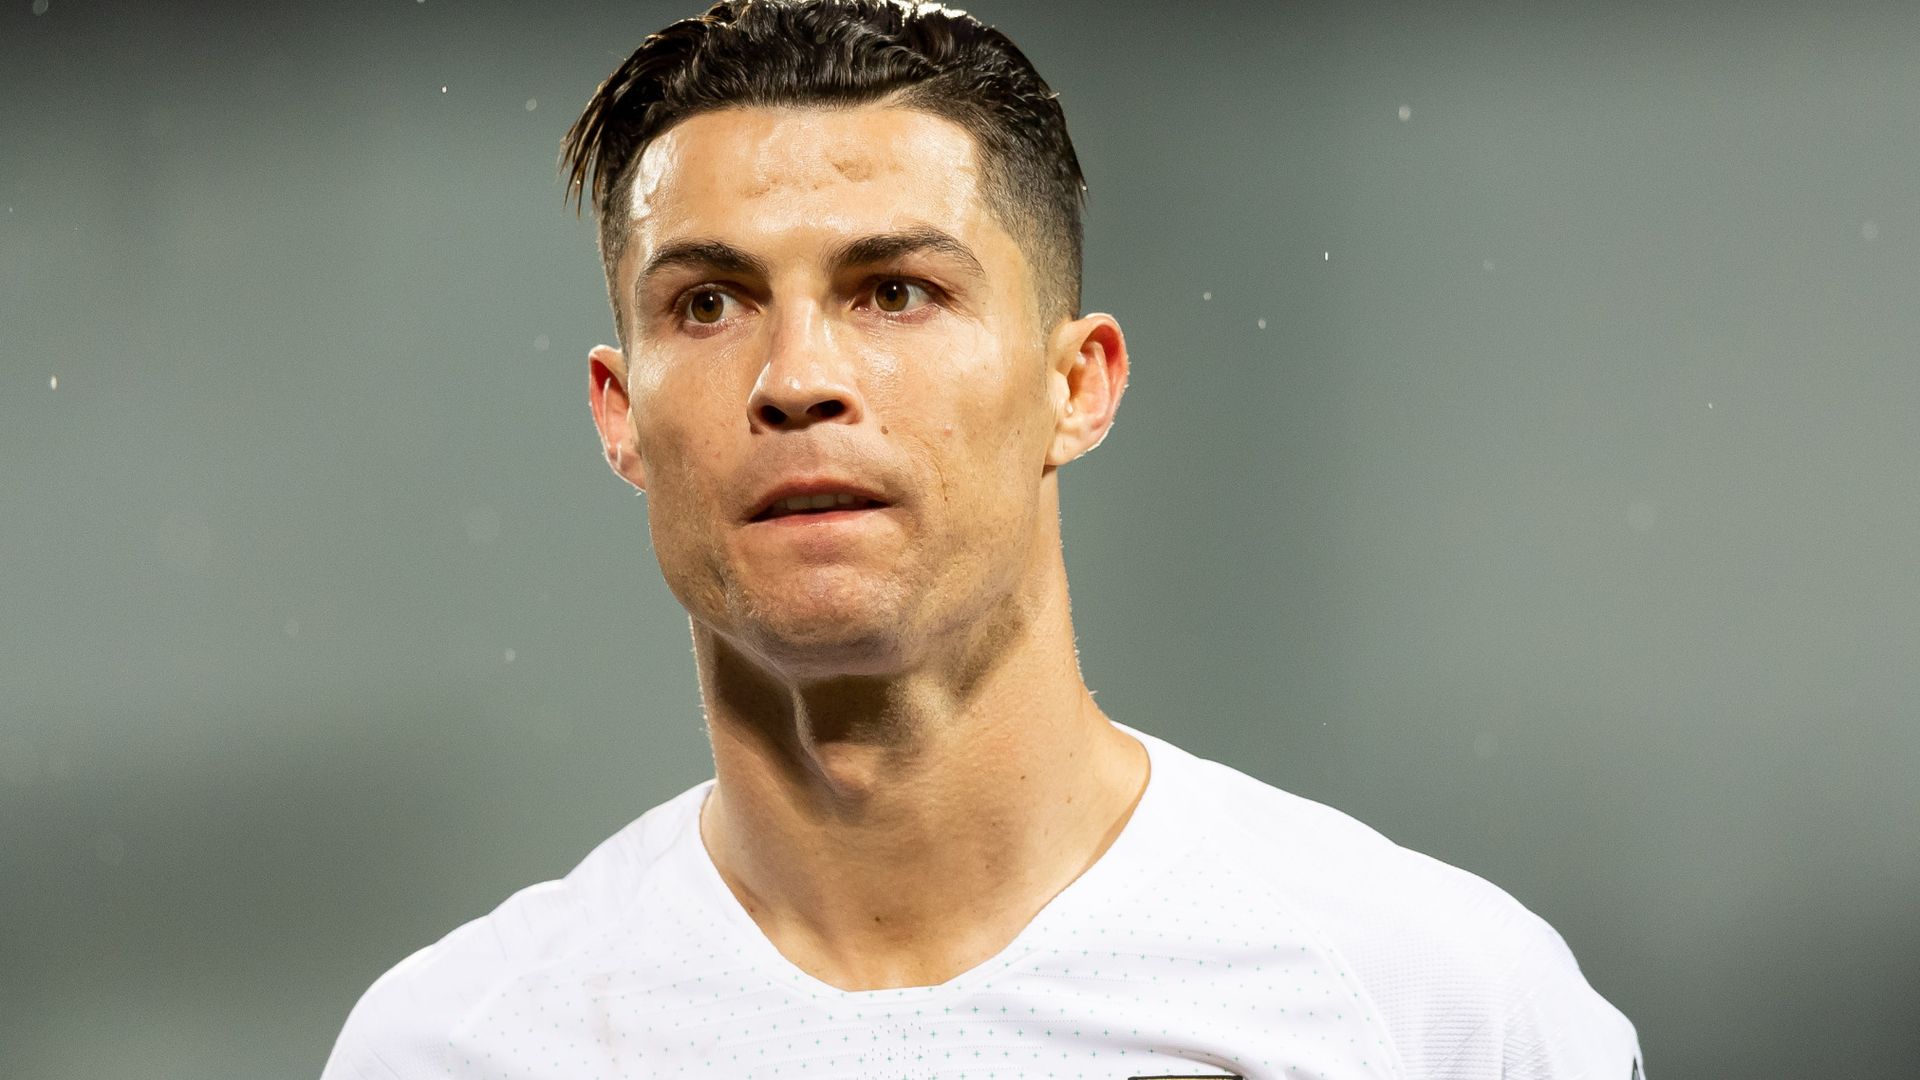 Ronaldo may have broken health protocols returning to Italy